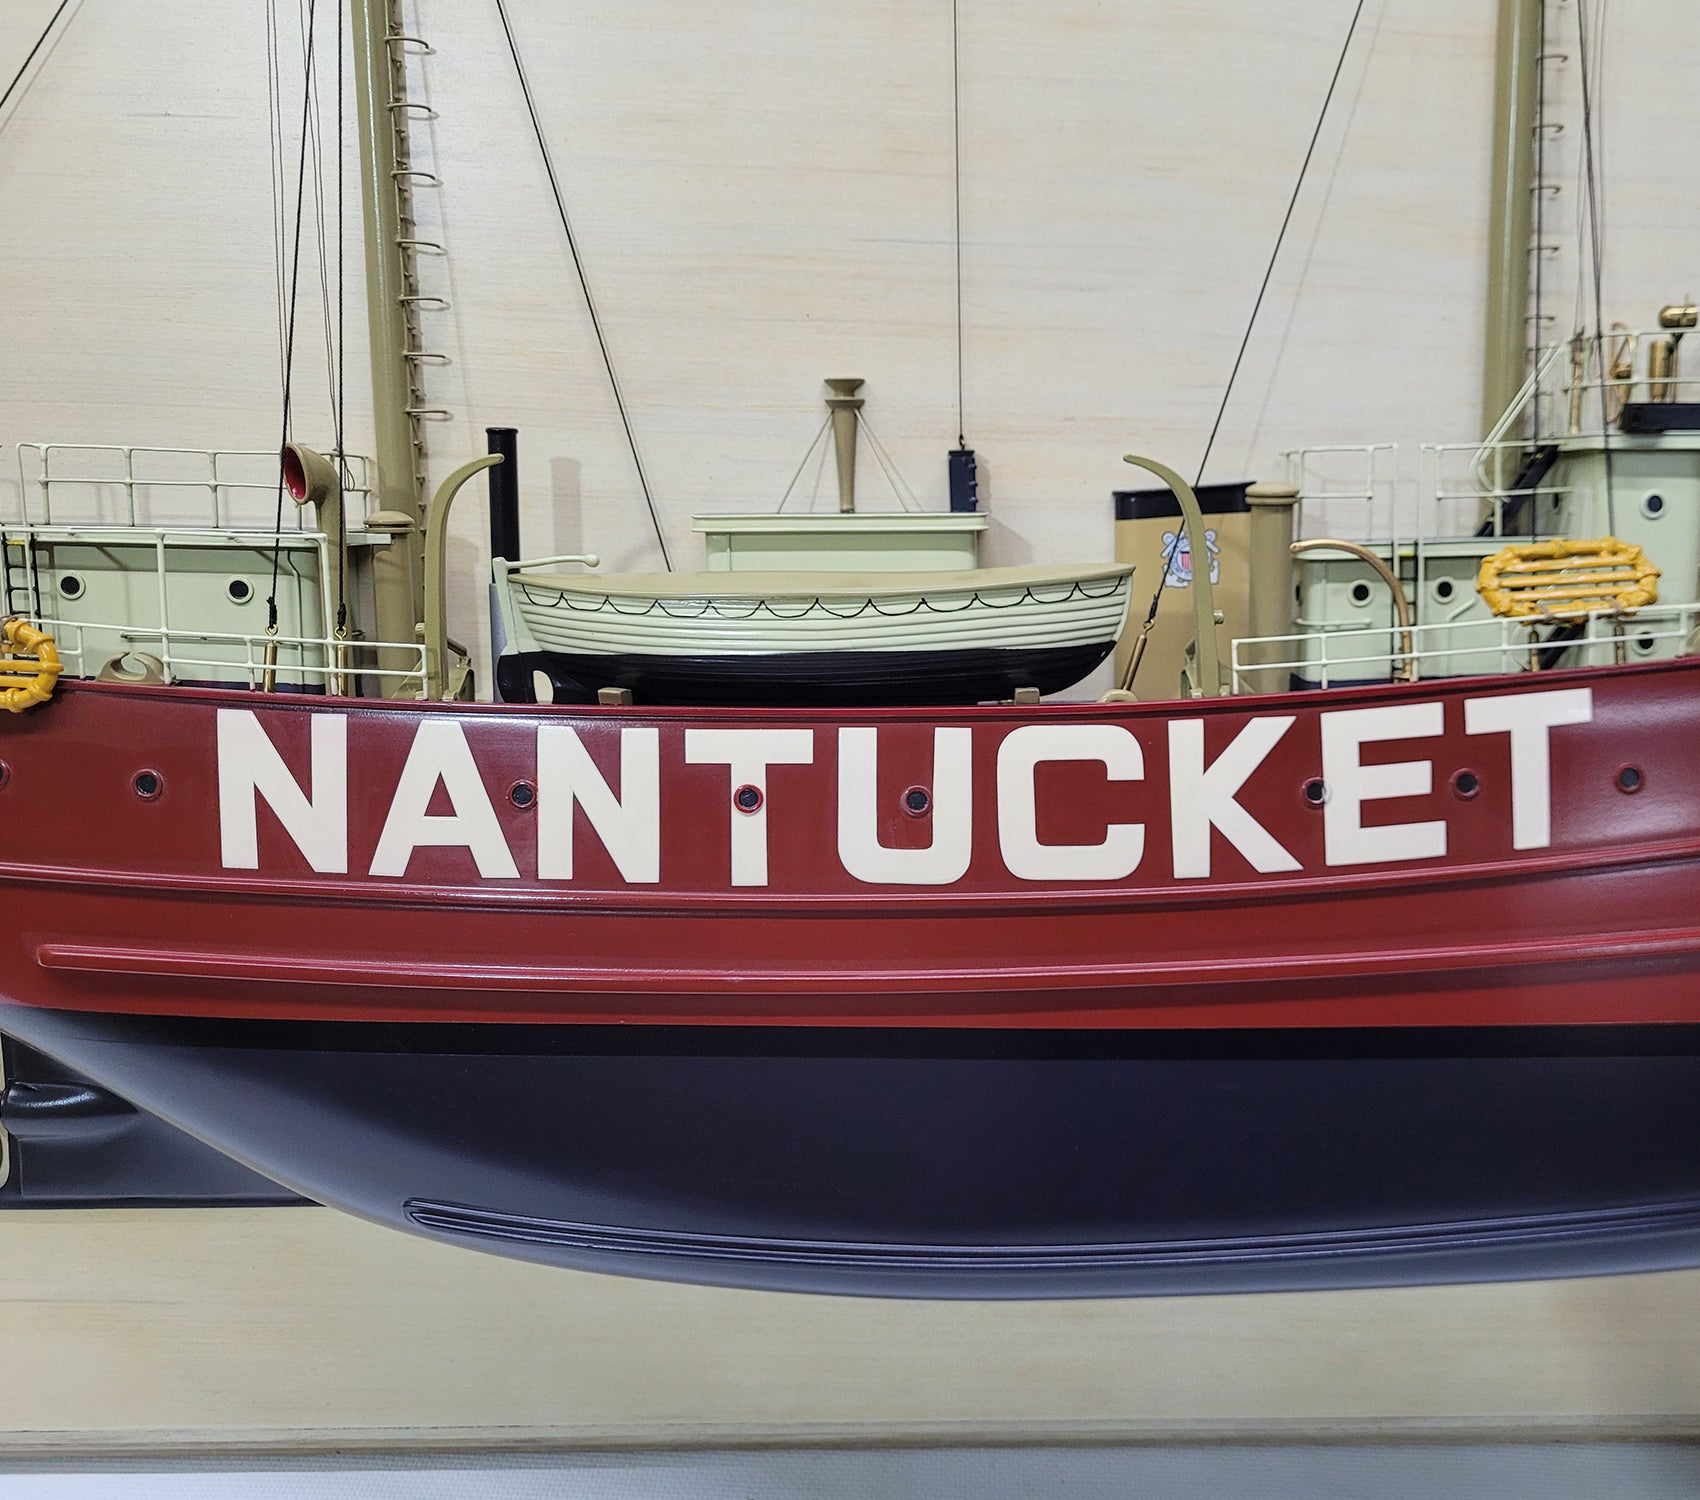 1/95 Nantucket LV117, A model of the Natucket Lightship (we…